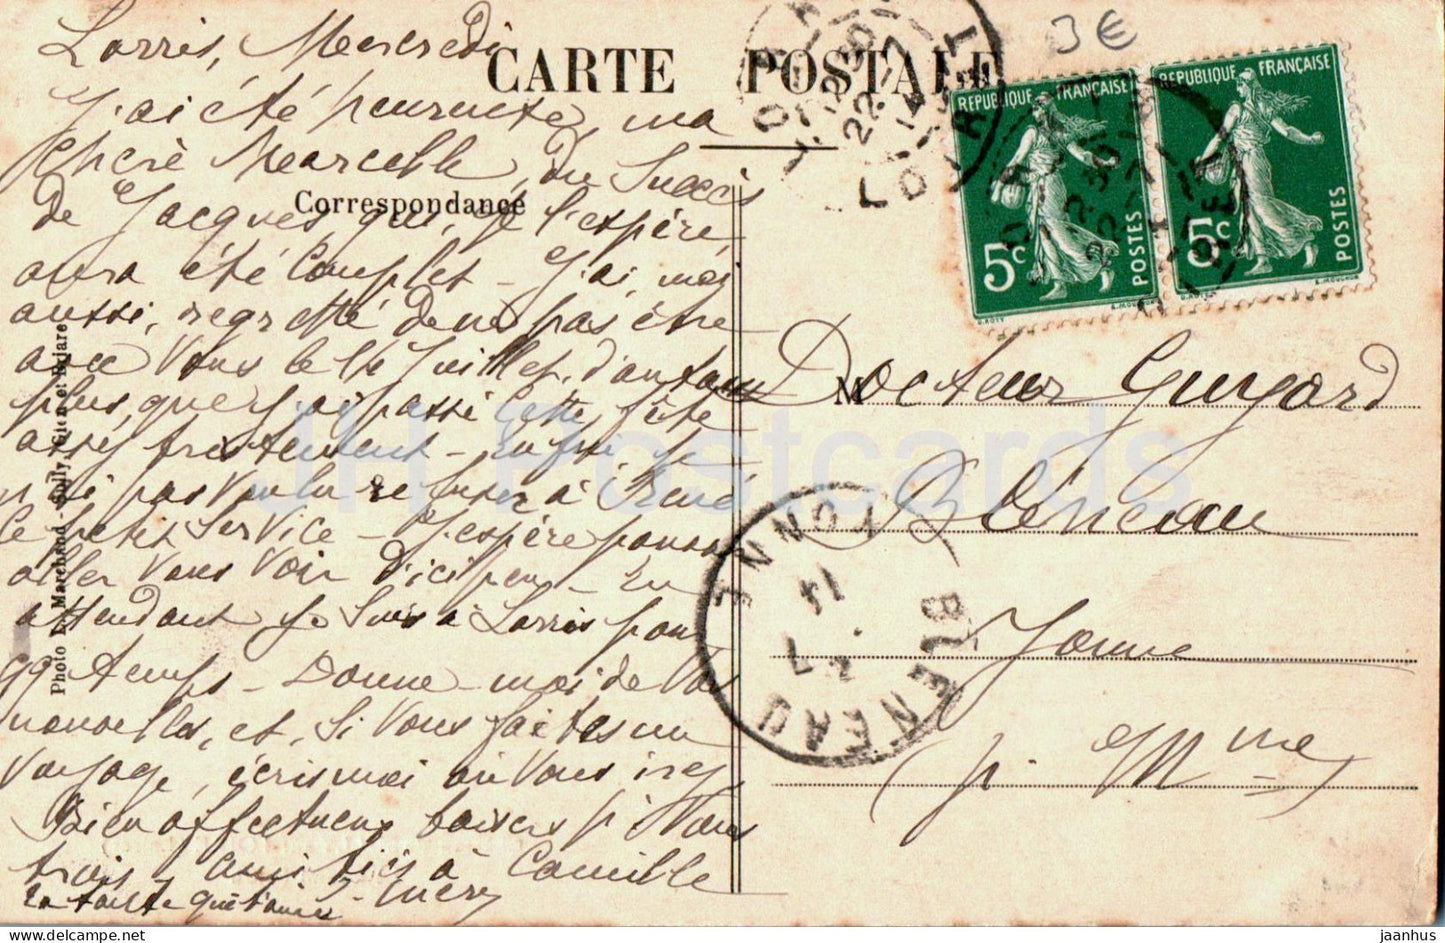 Chateau de Sully sur Loire - Le Grand Salon - Schloss - alte Postkarte - 1914 - Frankreich - gebraucht 